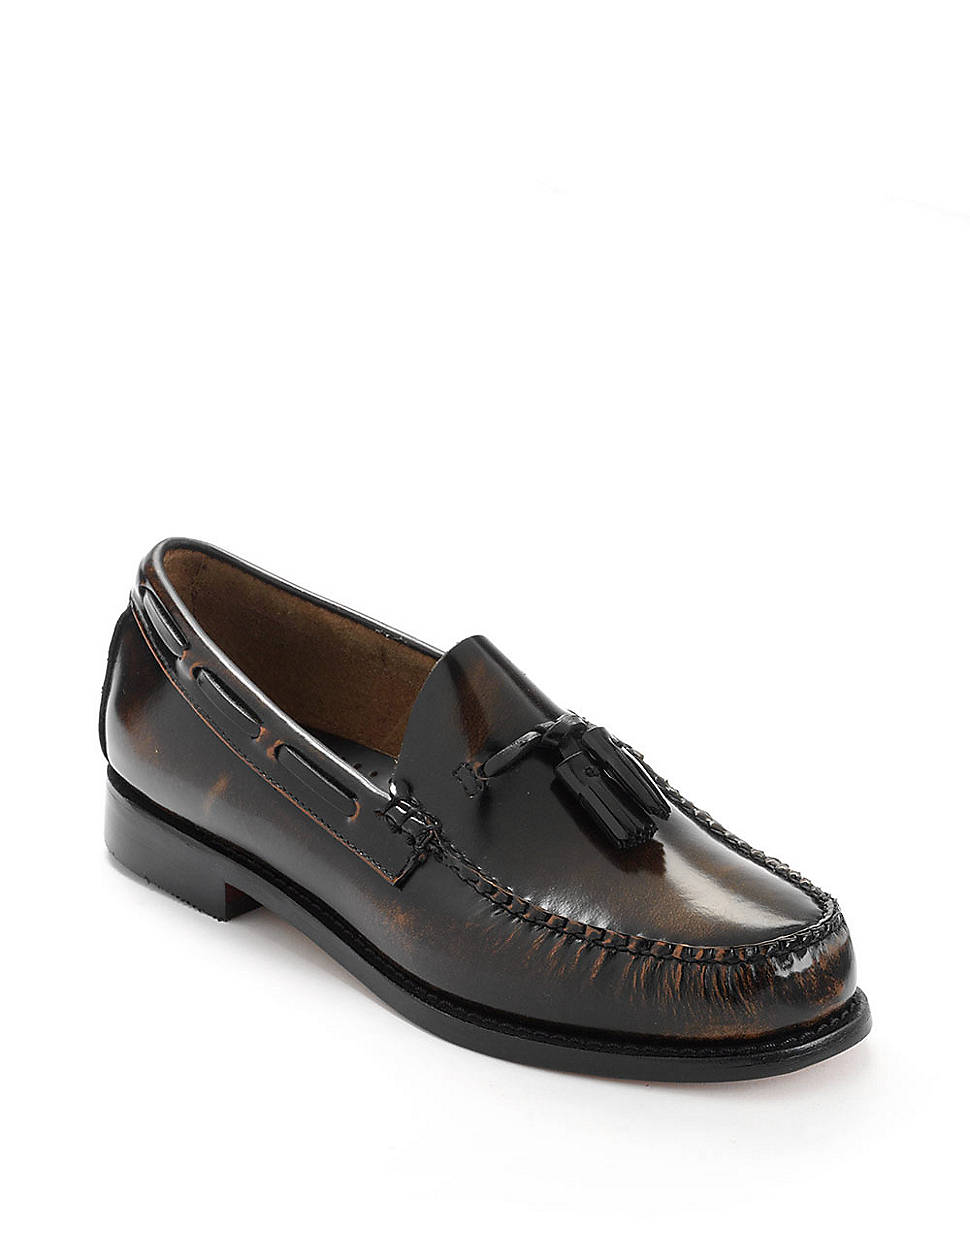 Lyst - G.H. Bass & Co. Larkin Leather Tassel Loafers in Brown for Men